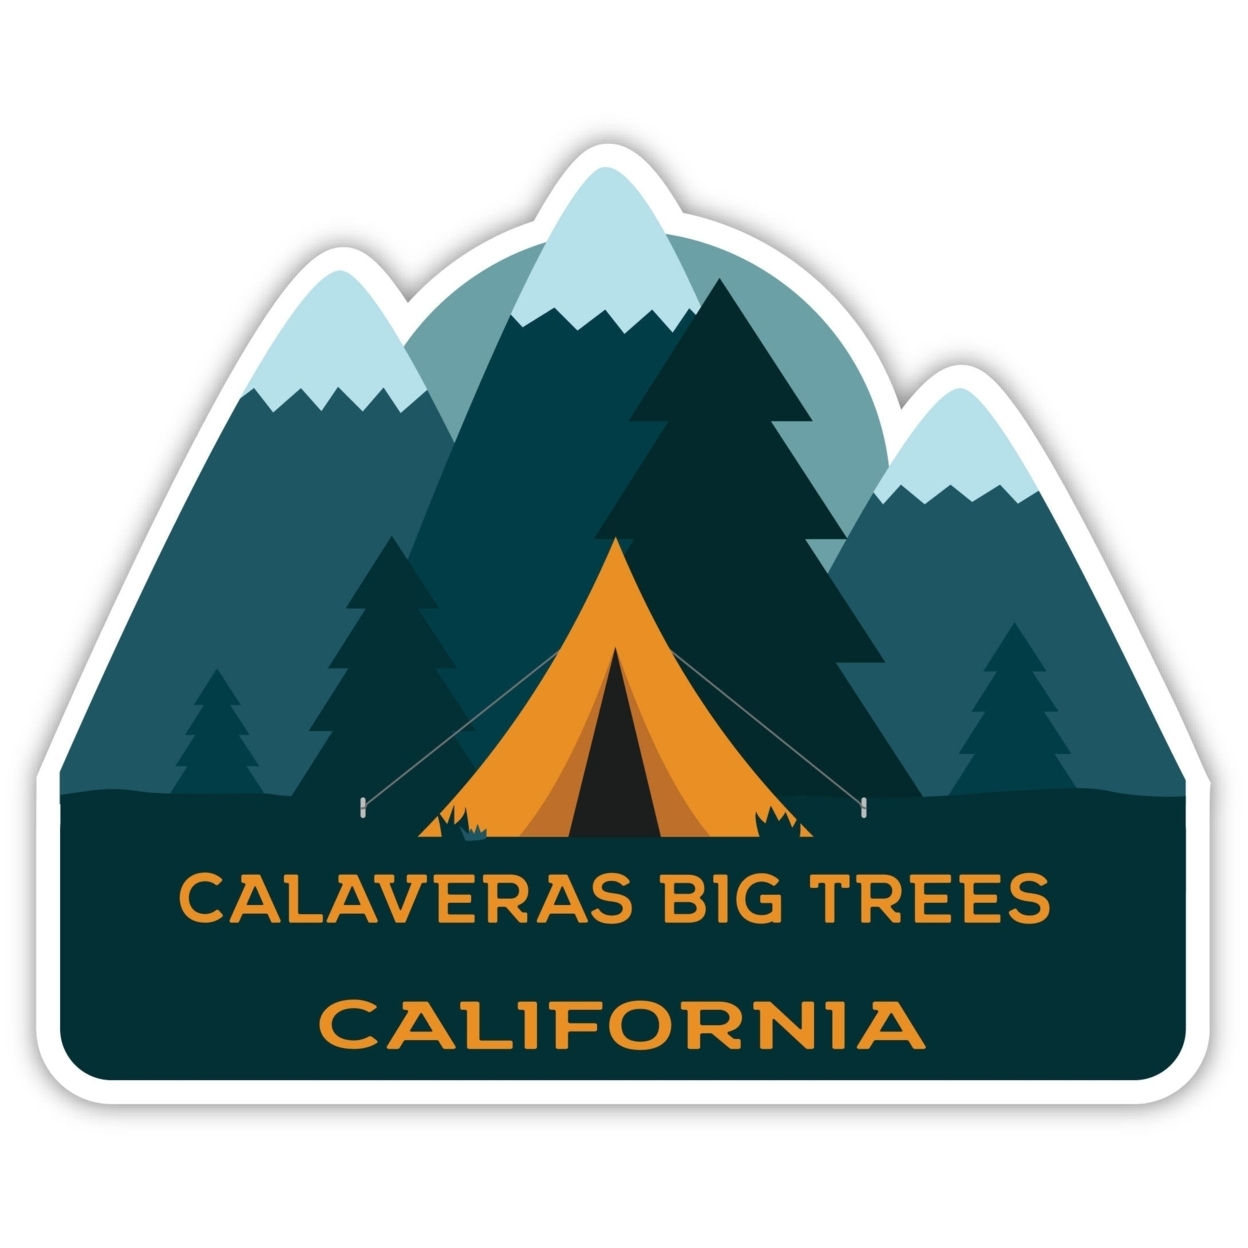 Calaveras Big Trees California Souvenir Decorative Stickers (Choose Theme And Size) - Single Unit, 4-Inch, Tent